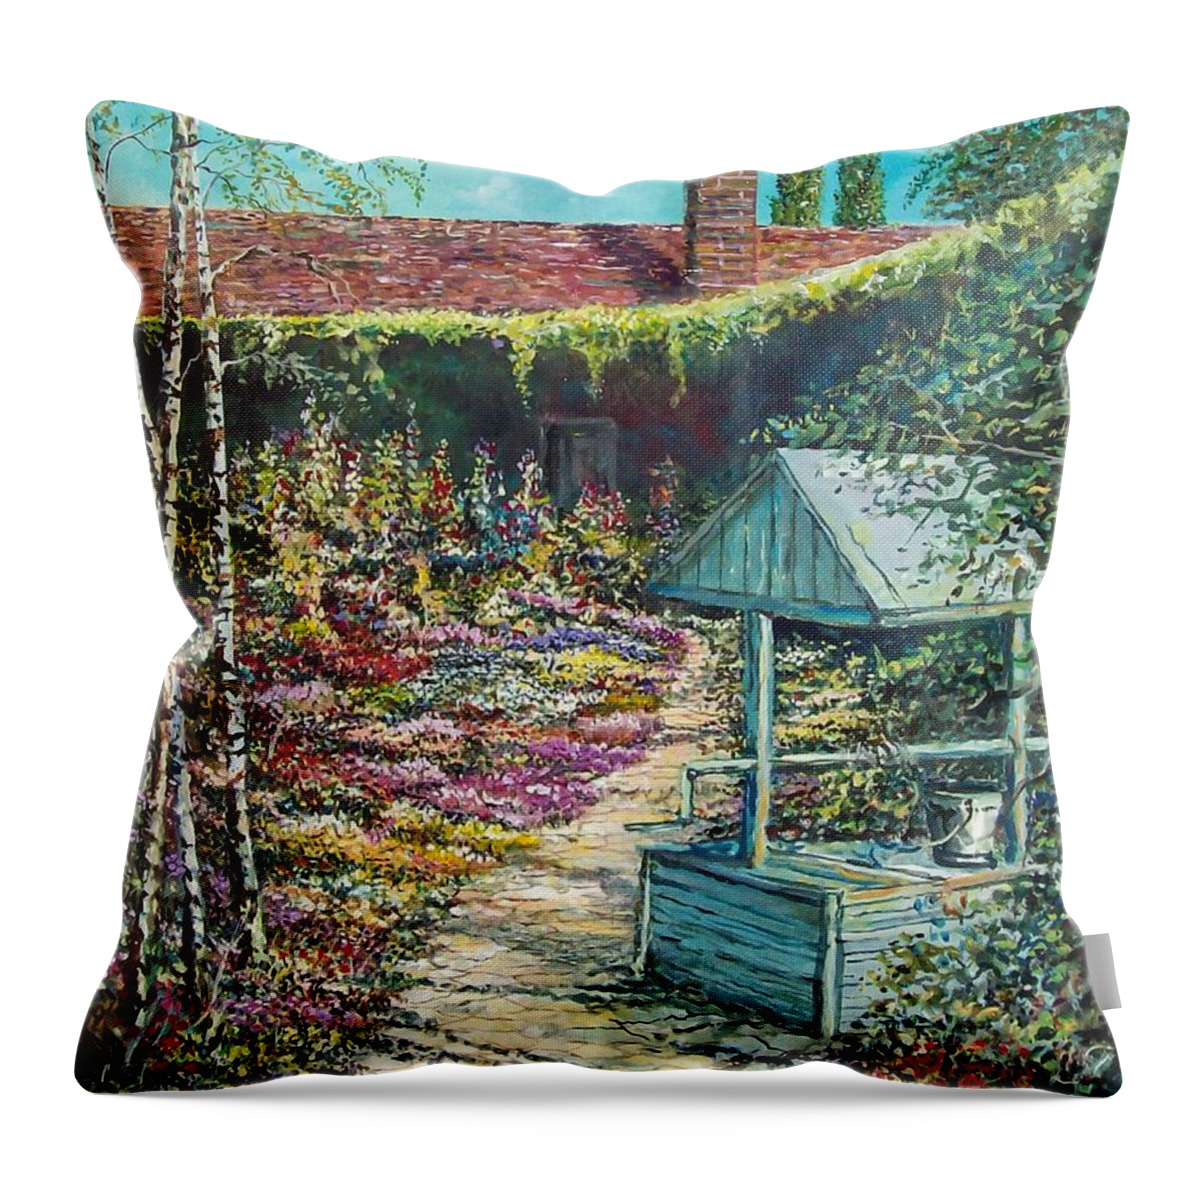 Garden Throw Pillow featuring the painting Mary's Garden by Sinisa Saratlic